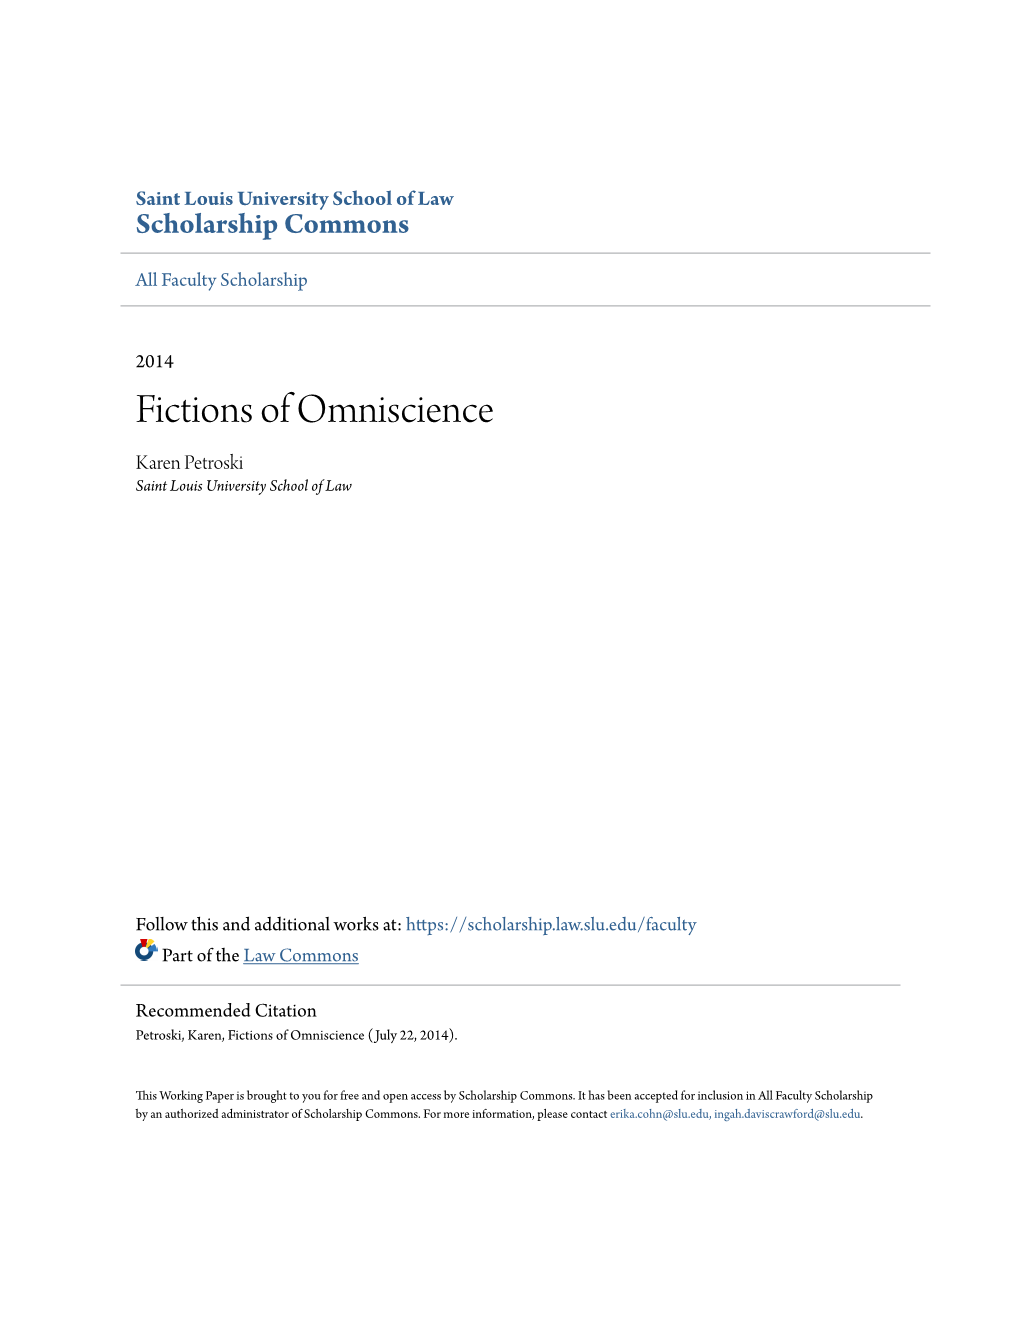 Fictions of Omniscience Karen Petroski Saint Louis University School of Law